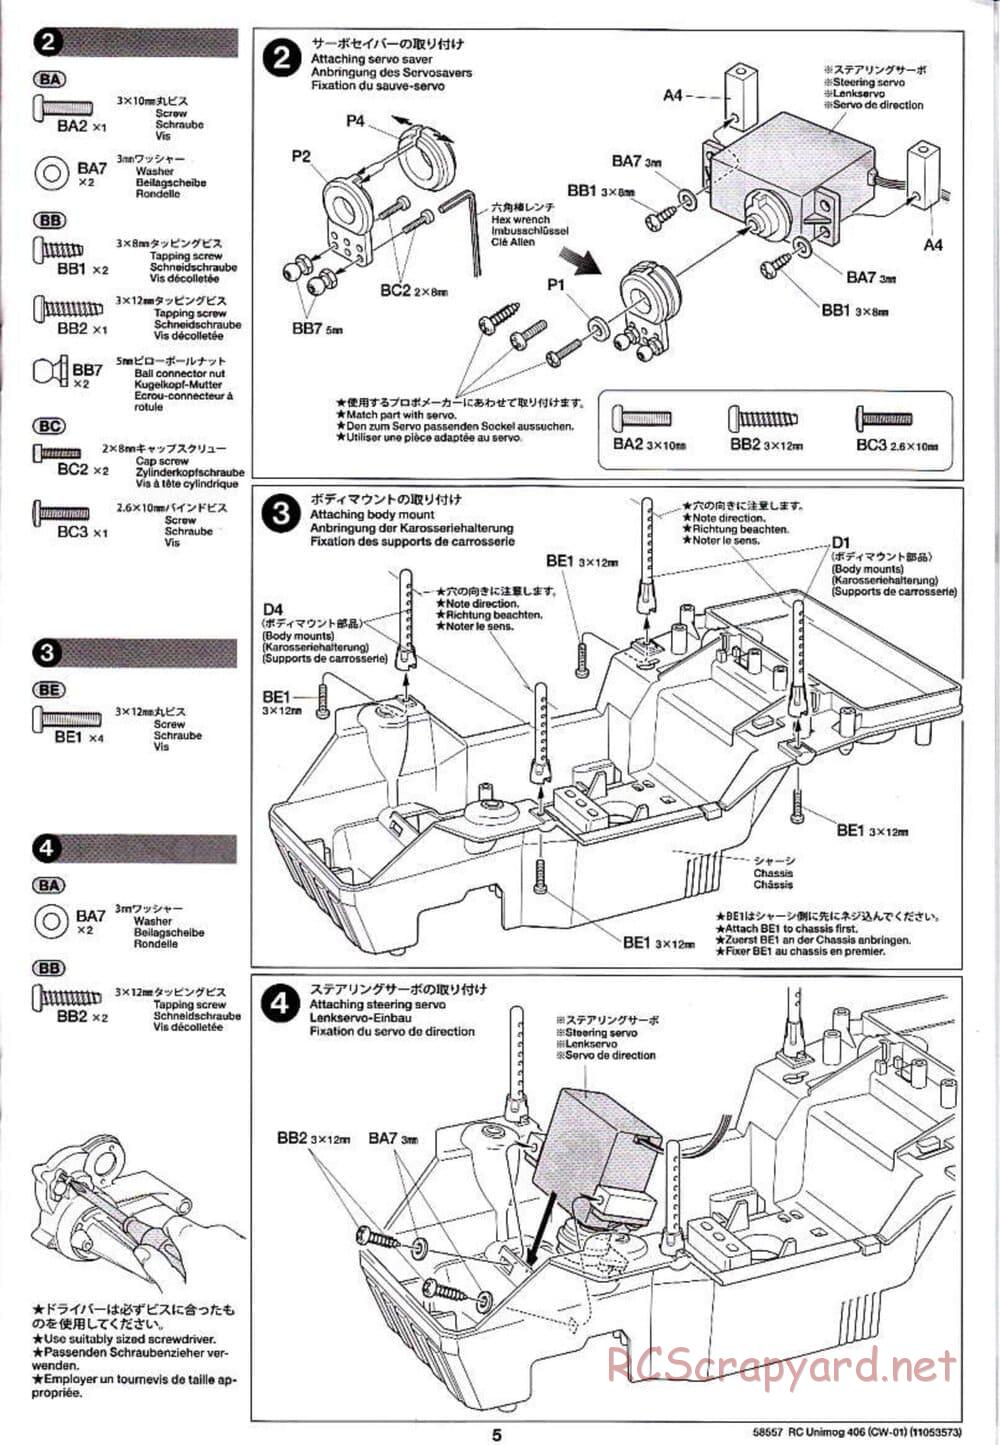 Tamiya - Mercedes-Benz Unimog 406 Series U900 - CW-01 Chassis - Manual - Page 5